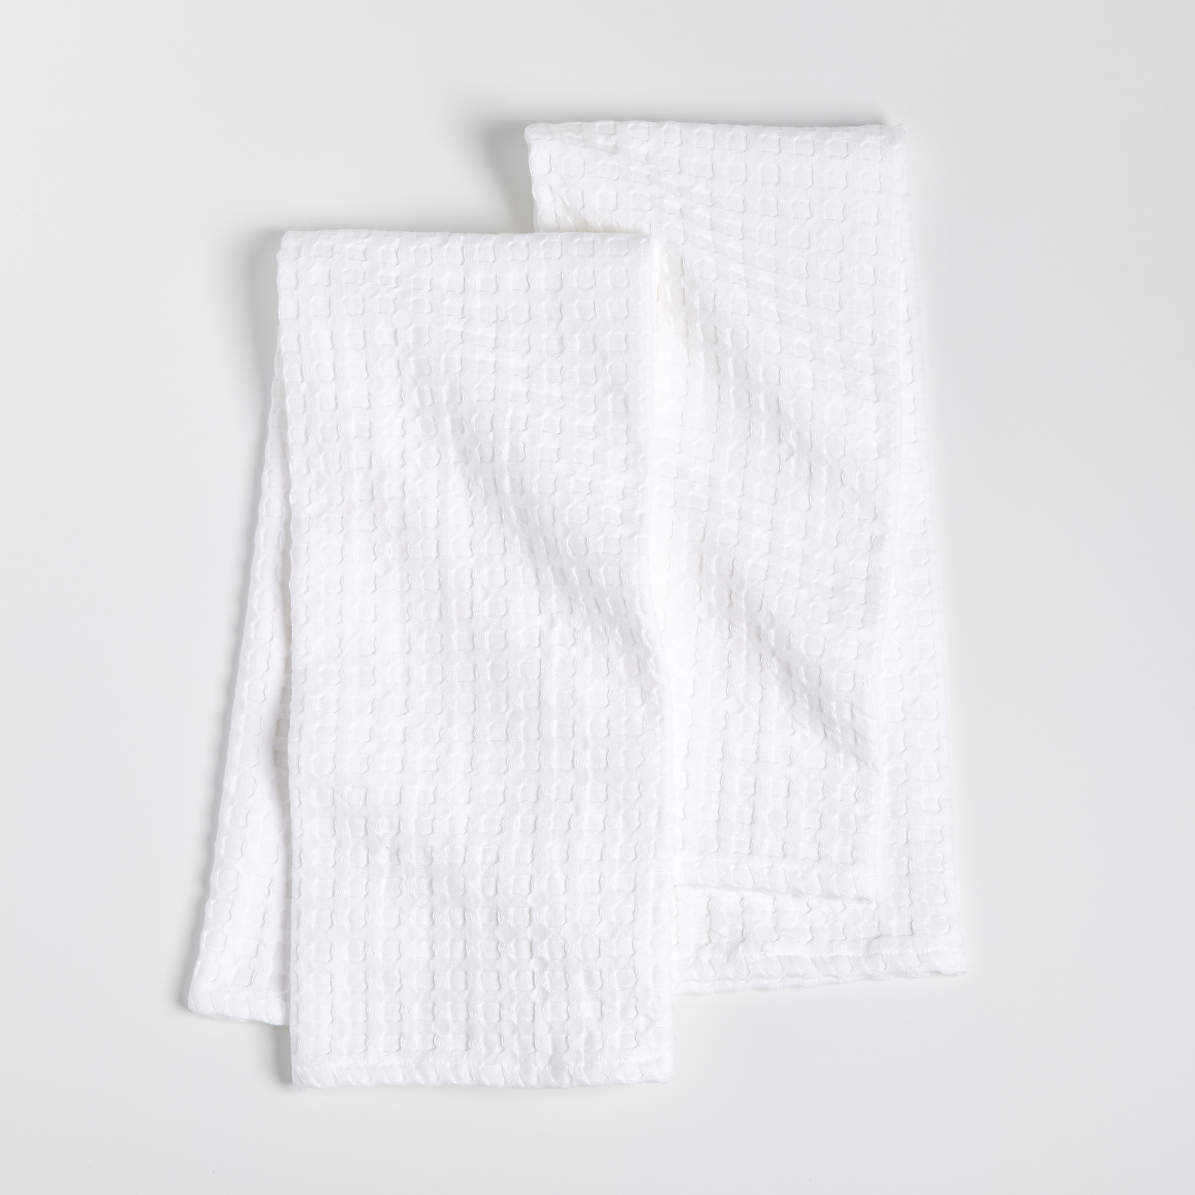 Kitchen Tea Towels Set of 4 Waffle Weave Aqua Grey White Plaid 